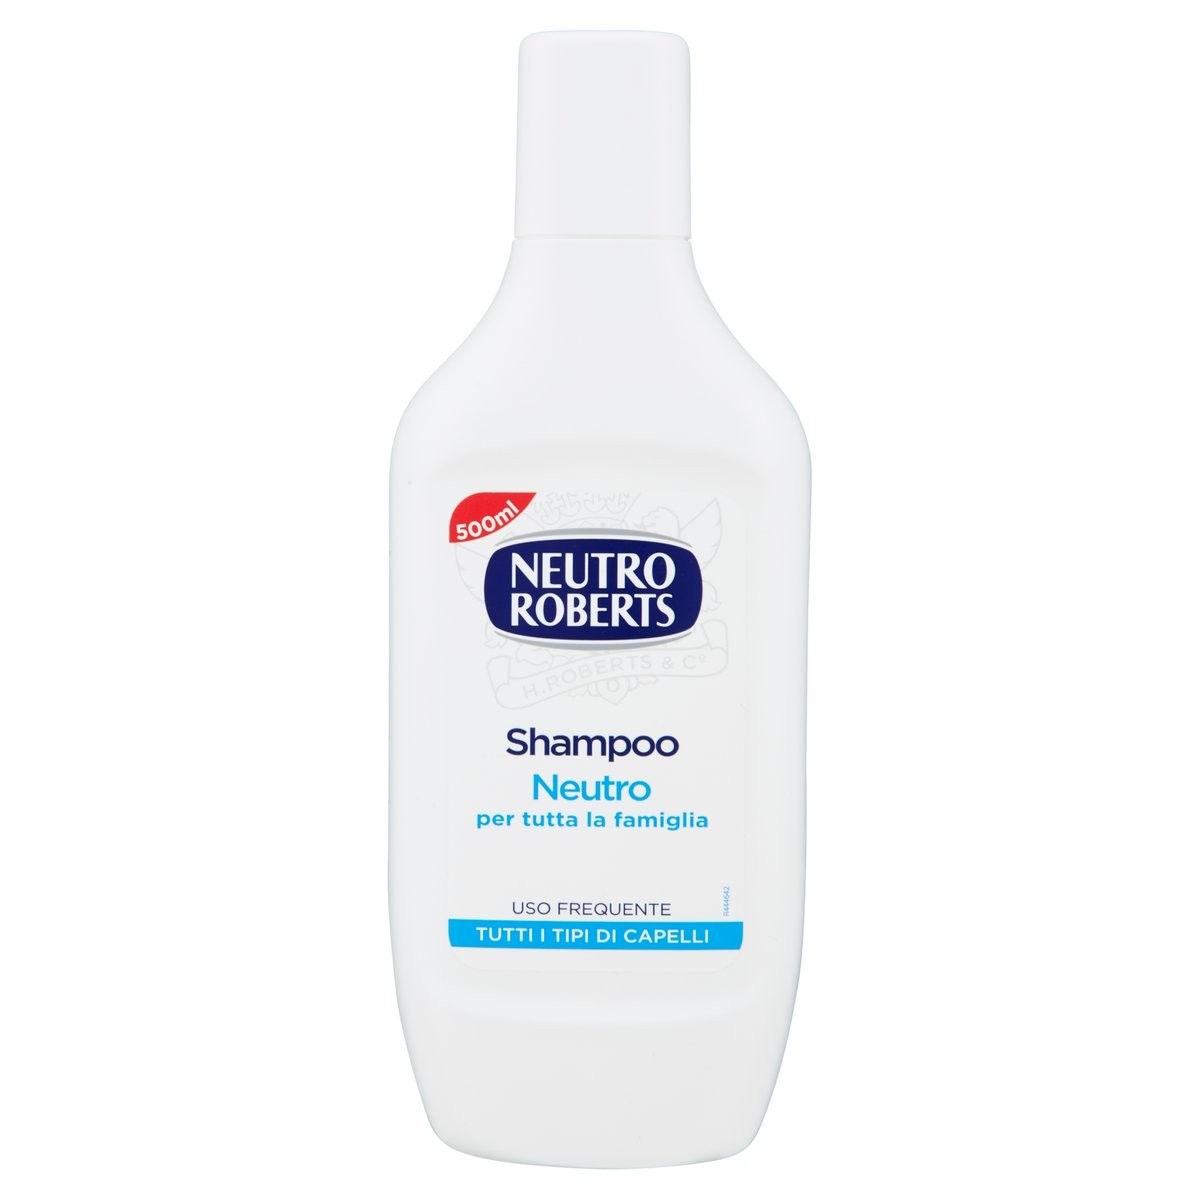 Neutro Roberts Shampoo neutro per tutta la famiglia